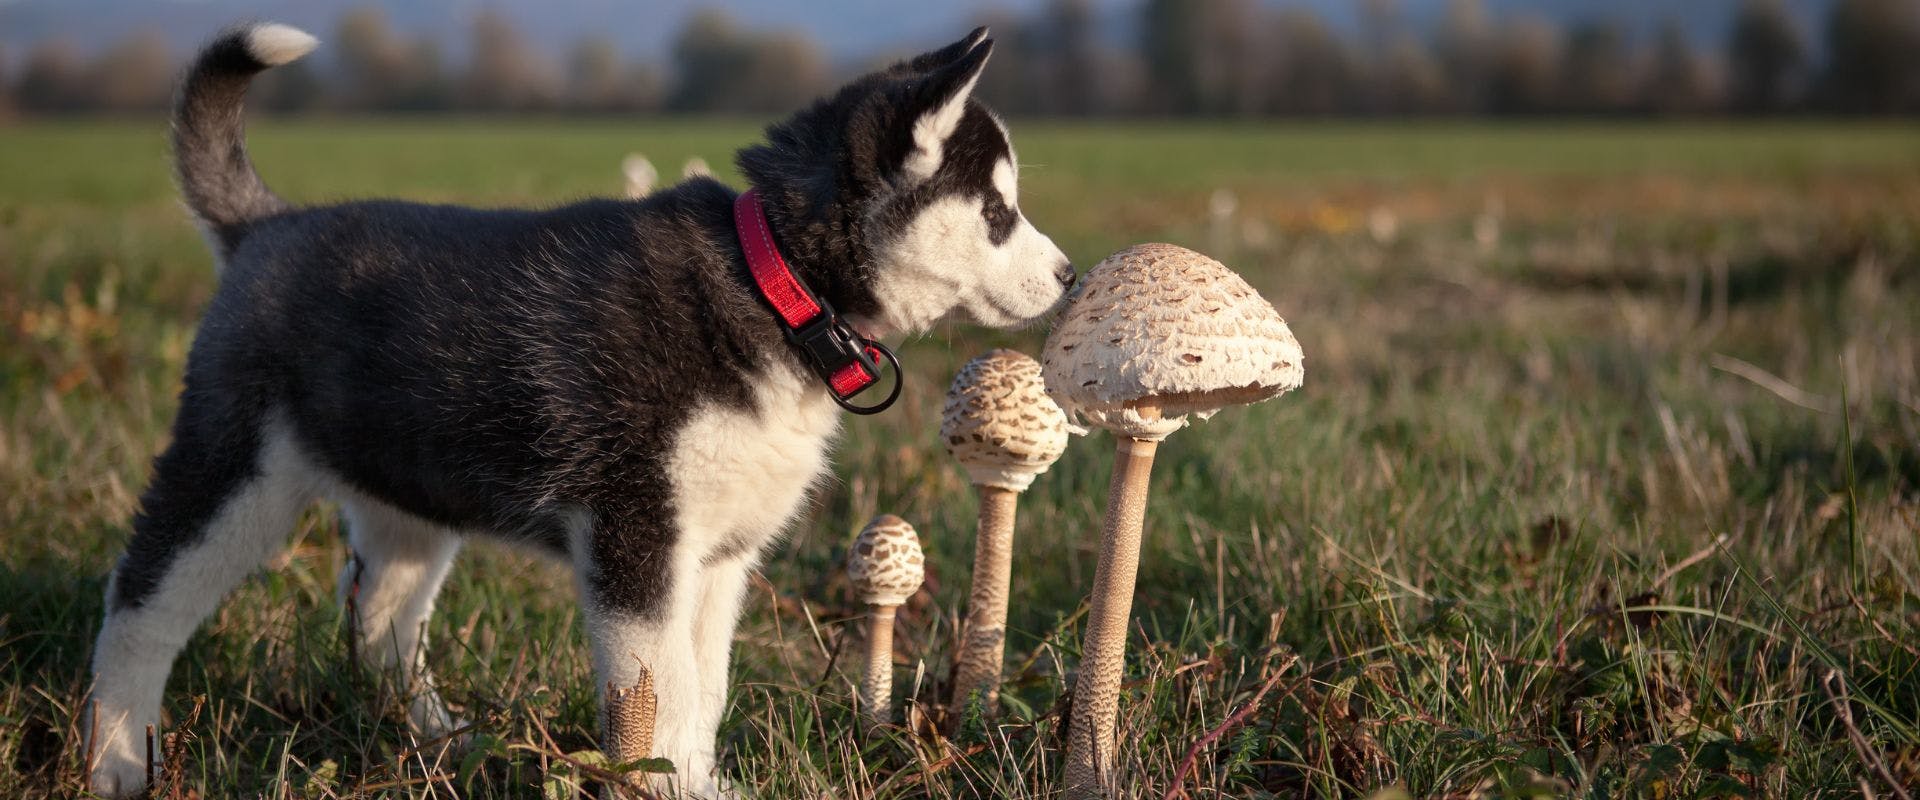 Husky puppy sniffing mushroom in ground